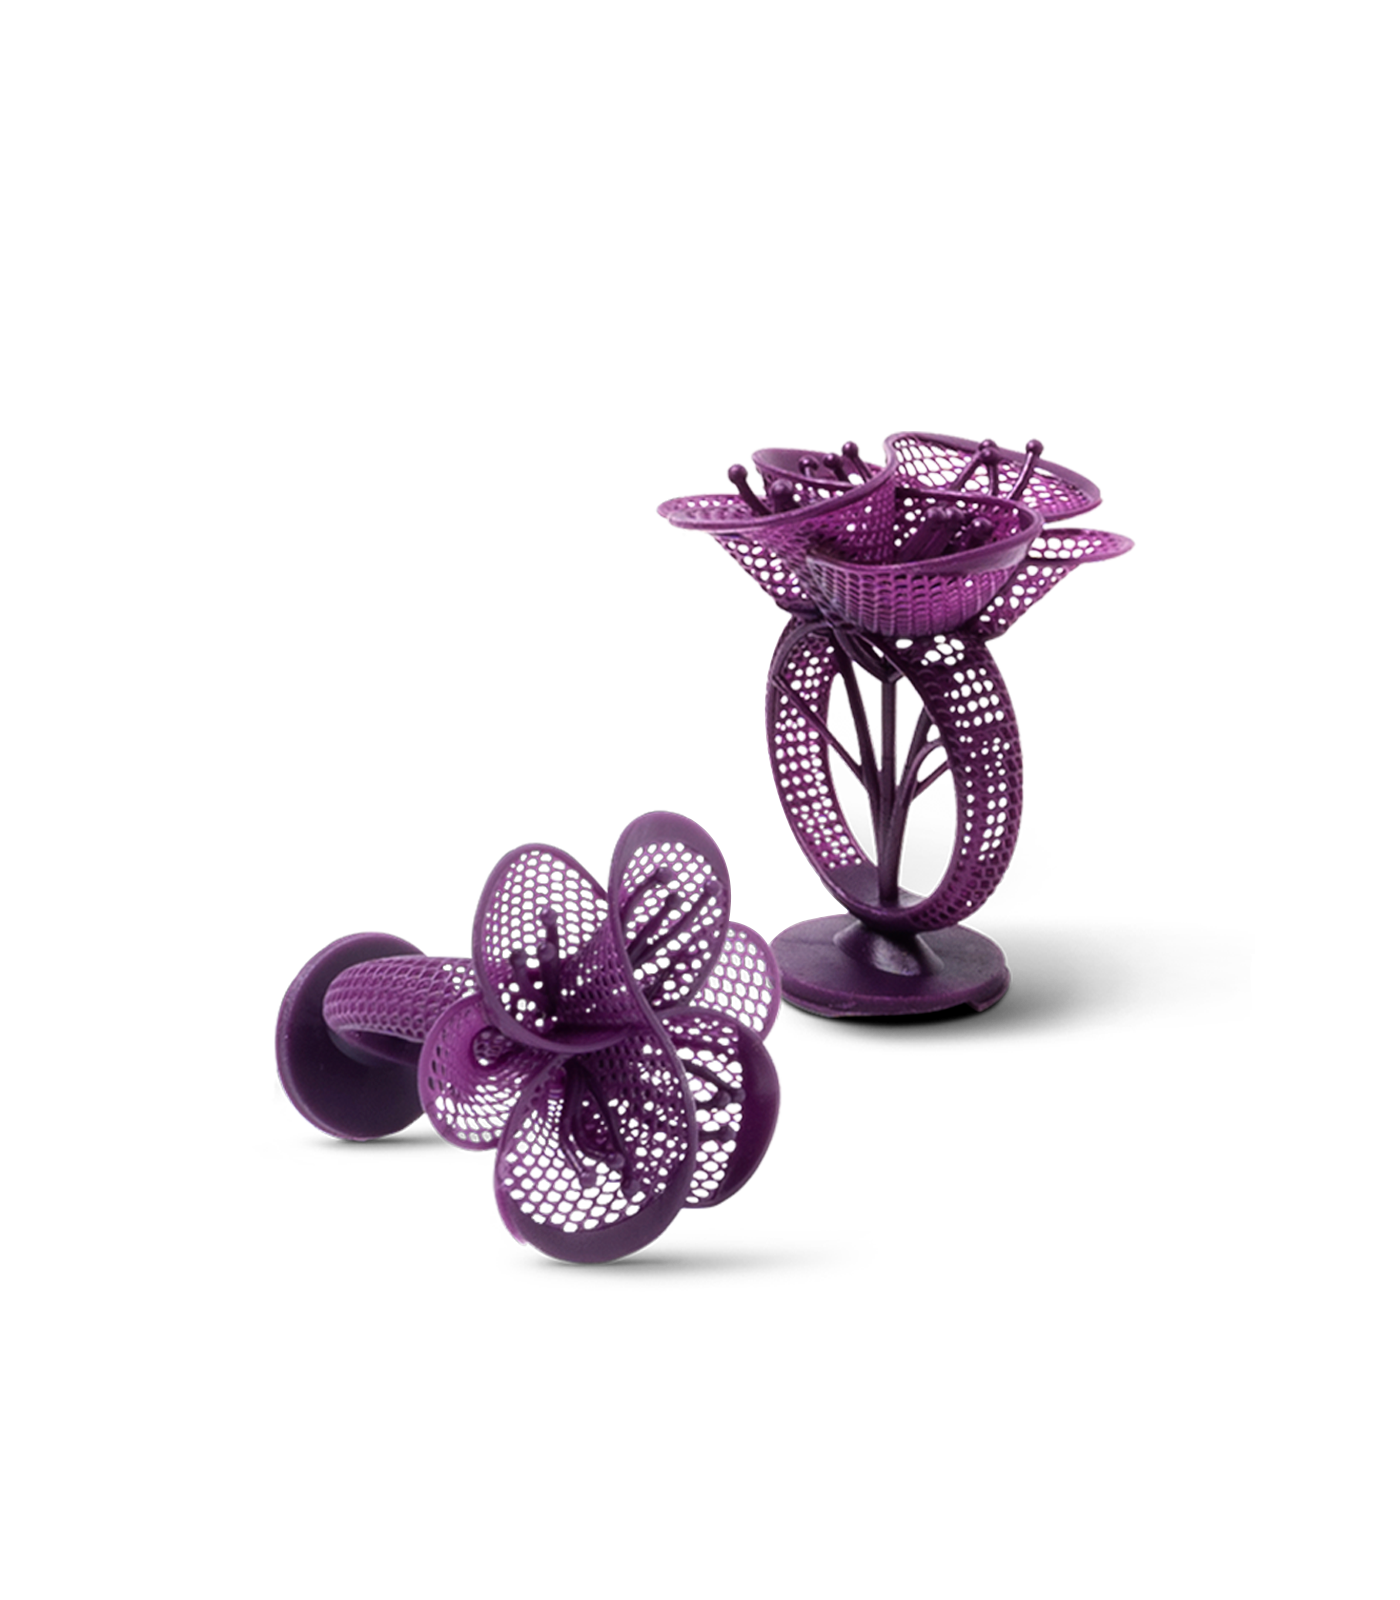 Phrozen Castable  Jewelry 3D Printing Resin